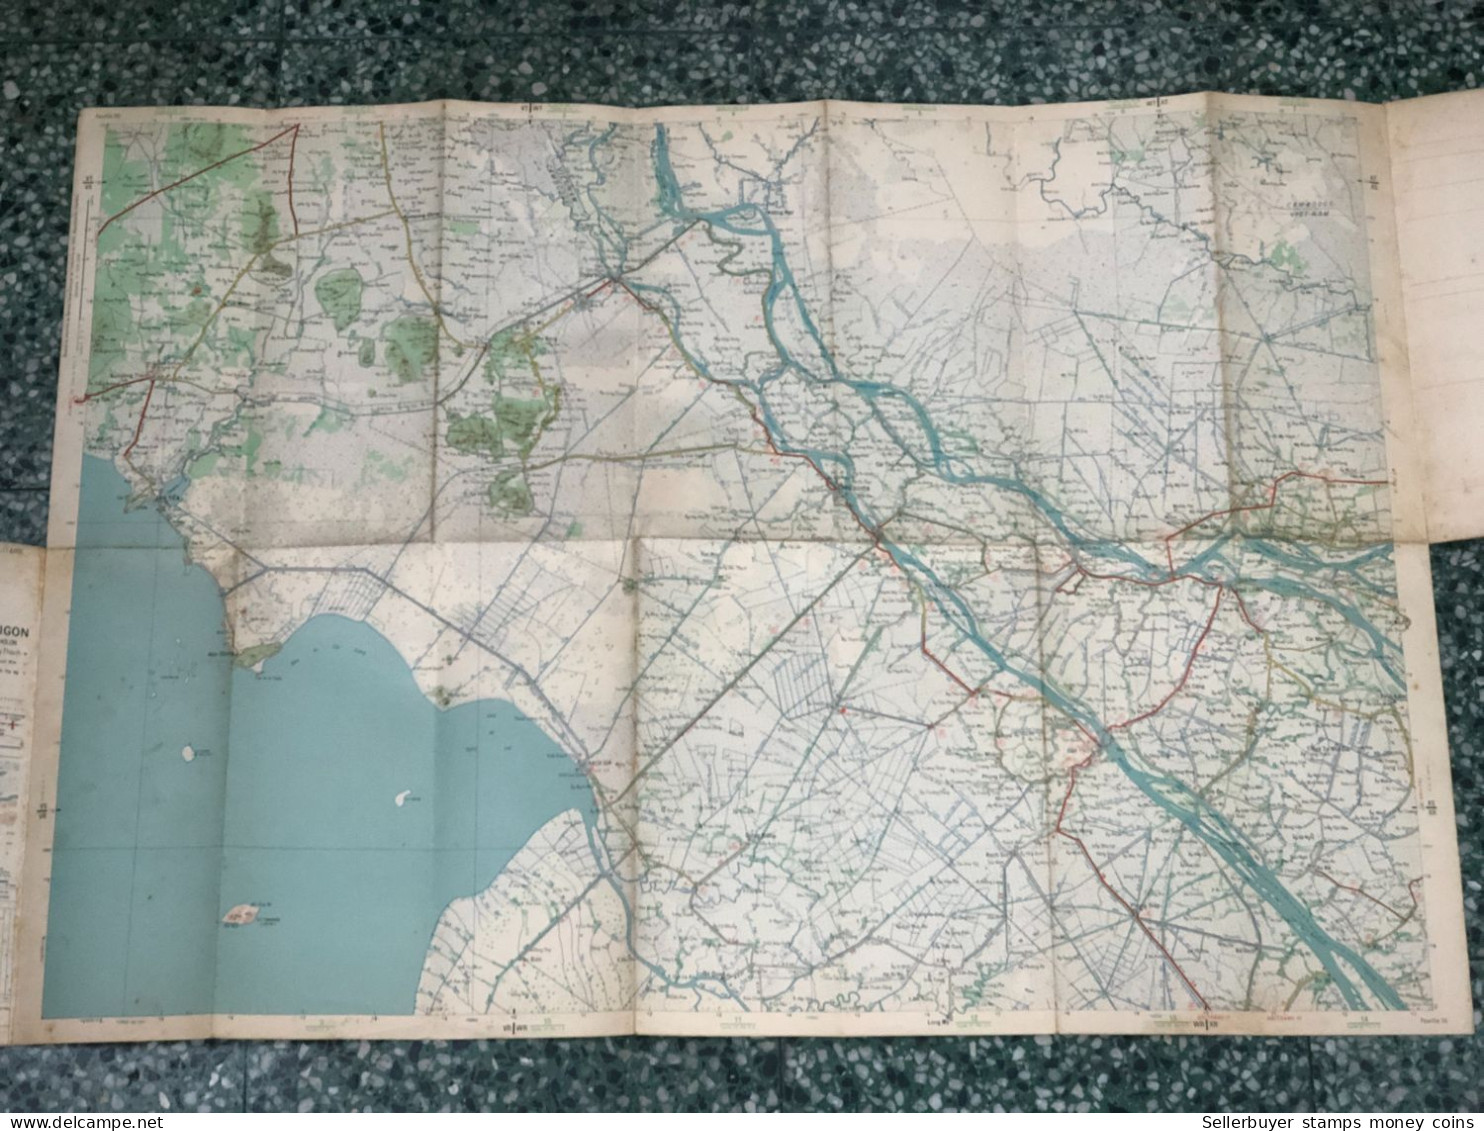 Maps Old-viet Nam Indo-china Carte Routiere De Documentation Militaire Before 1961-1 Pcs Very Rare - Topographische Kaarten